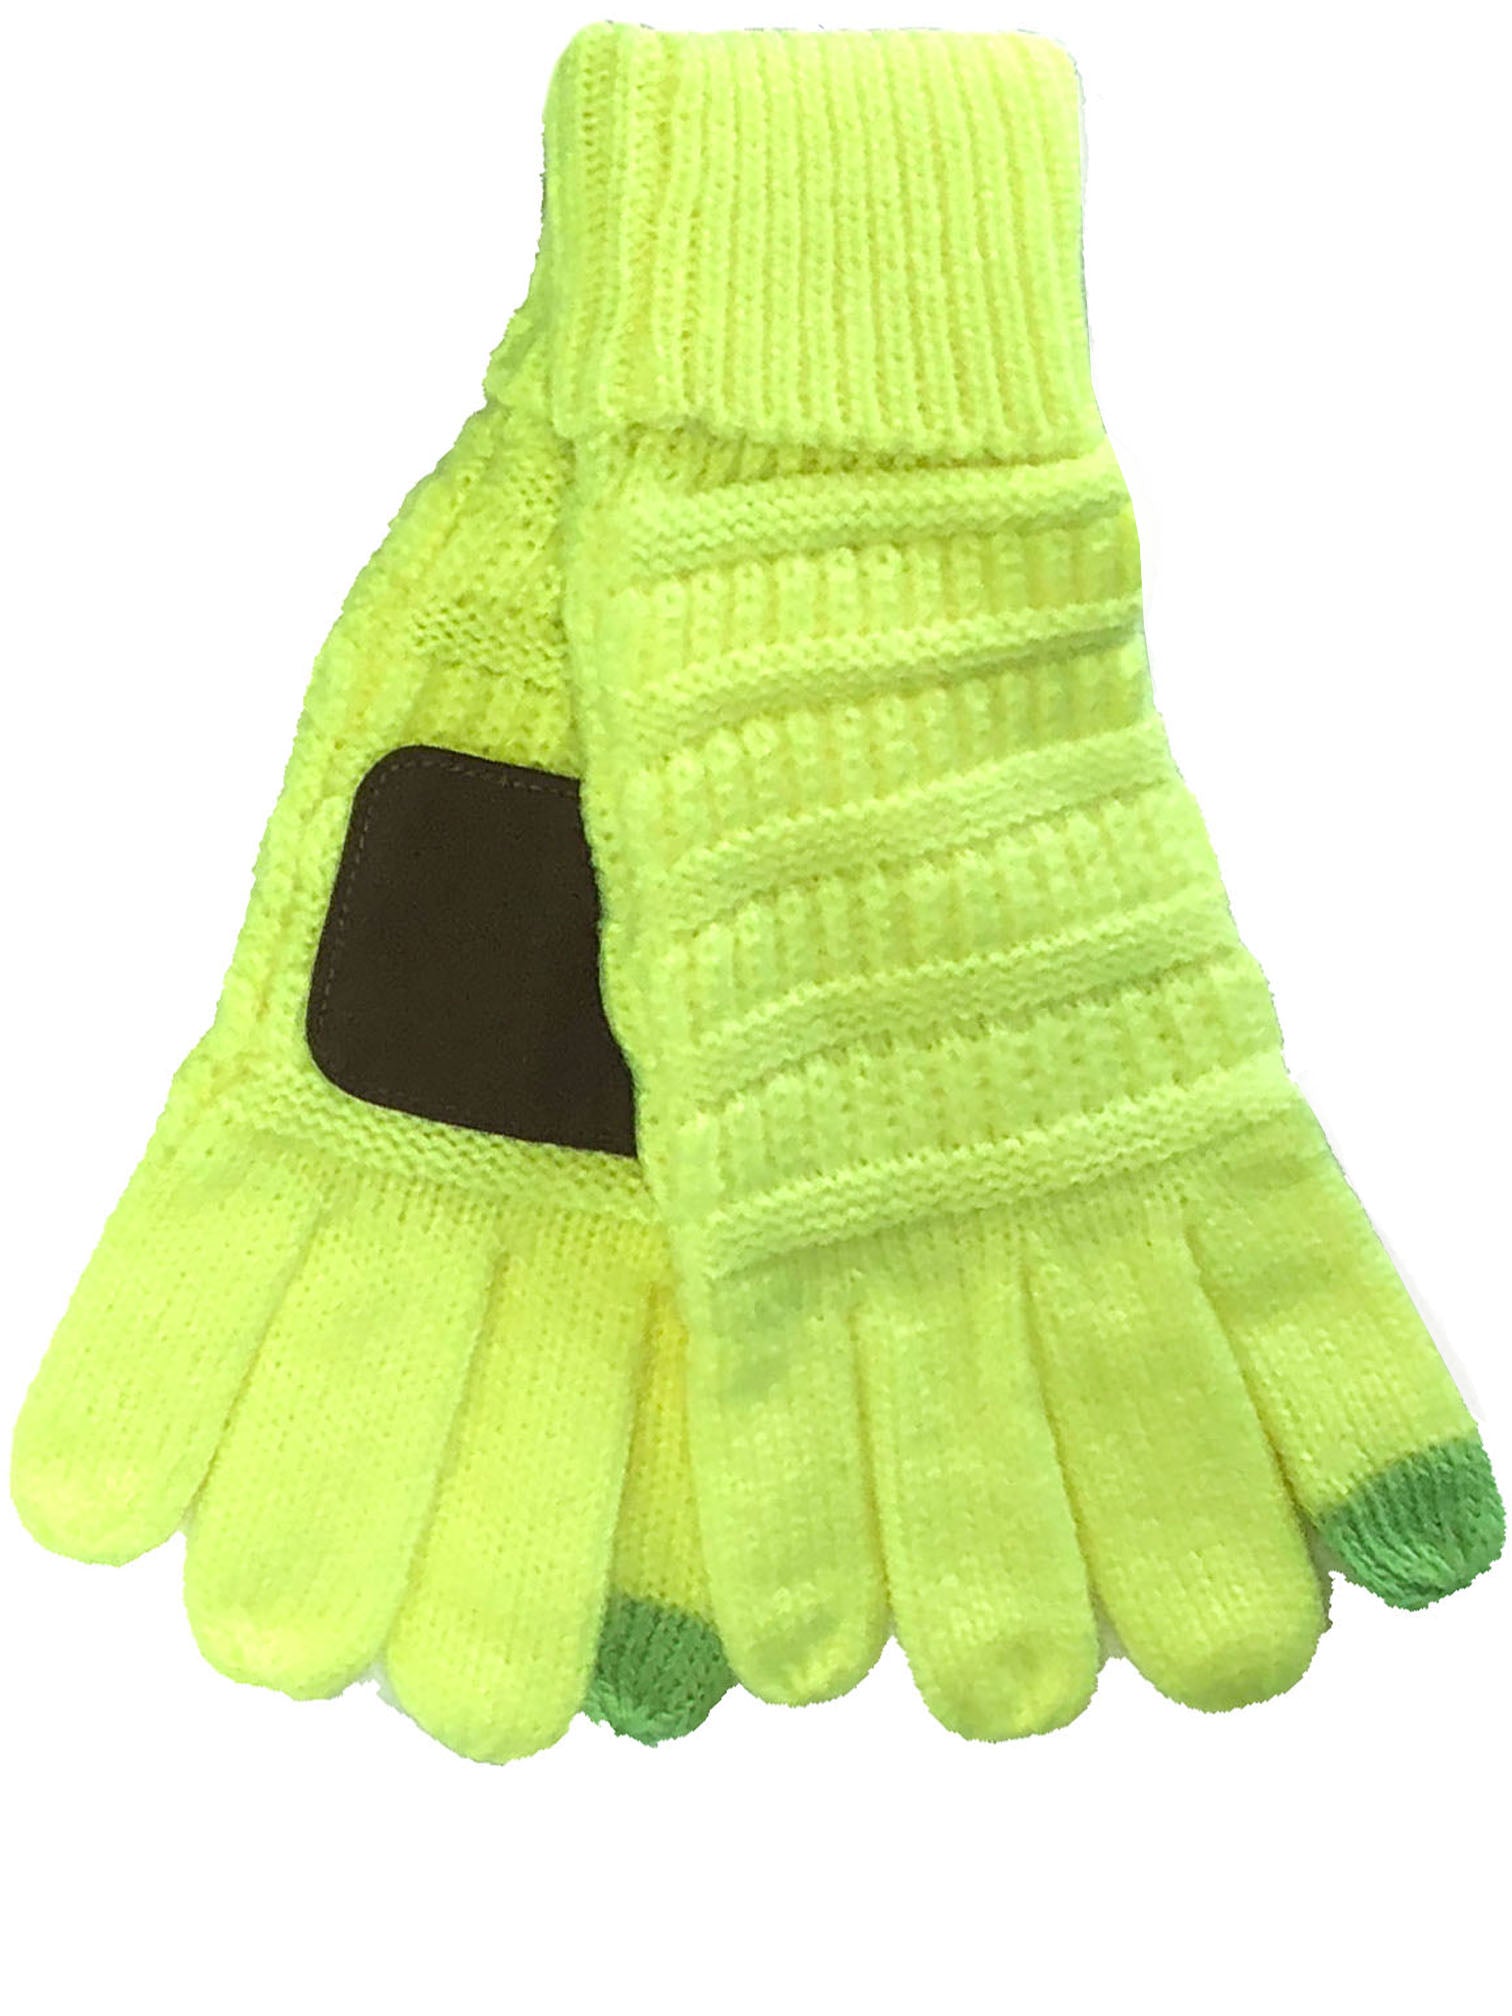 G-20 C.C Neon Yellow Gloves